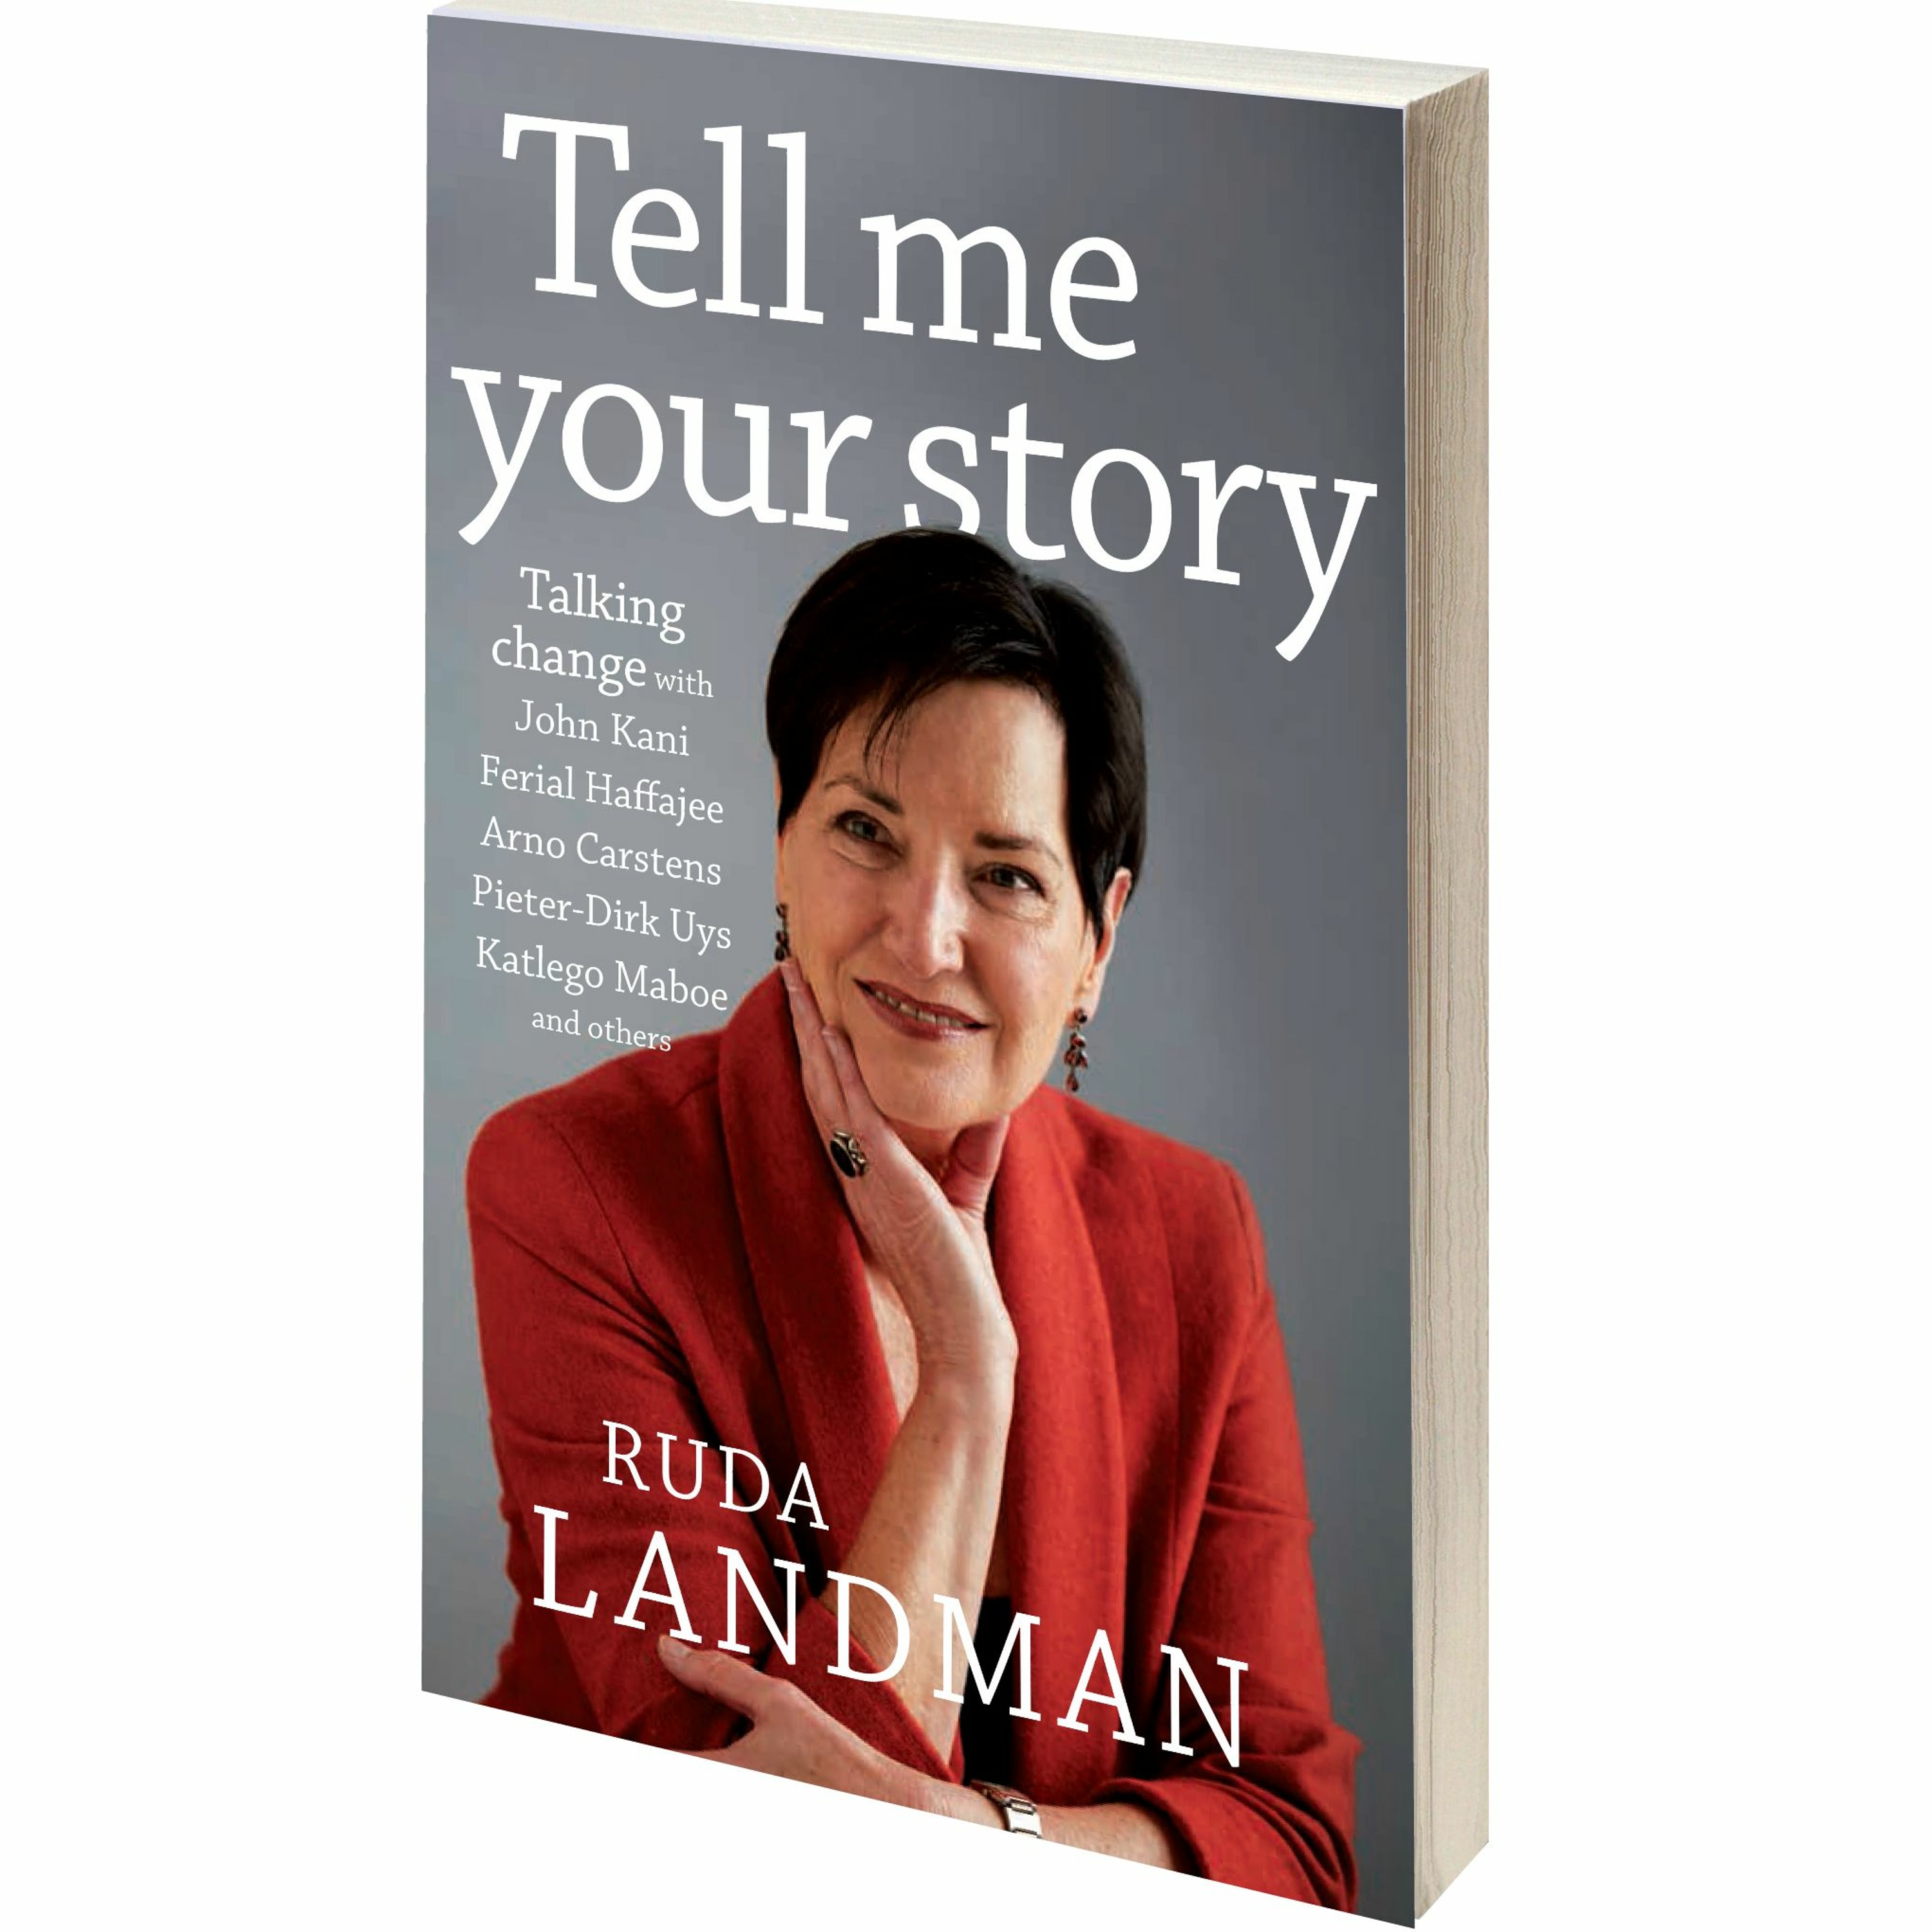 Ruda Landman tells her story